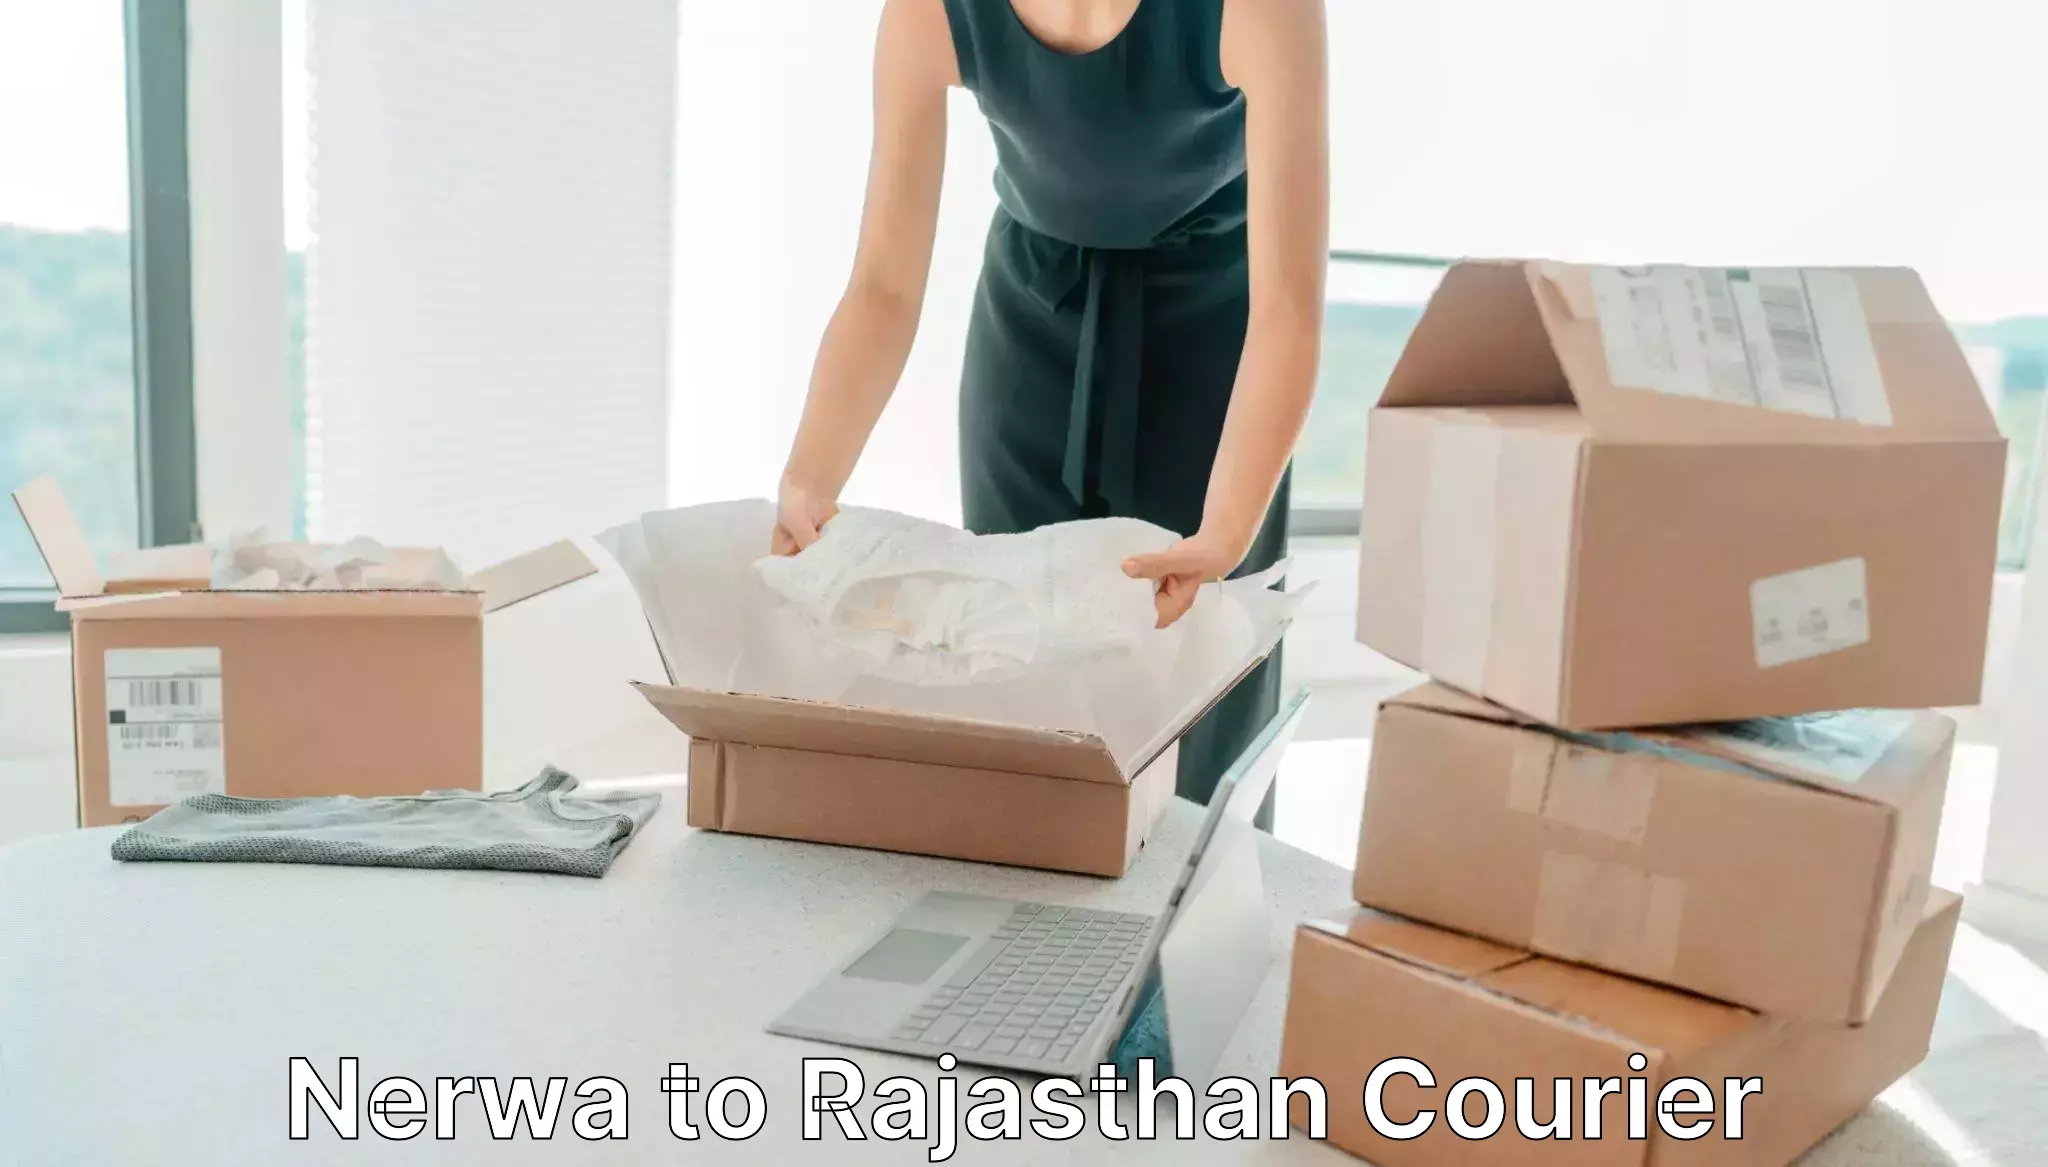 Professional courier handling Nerwa to Jaipur